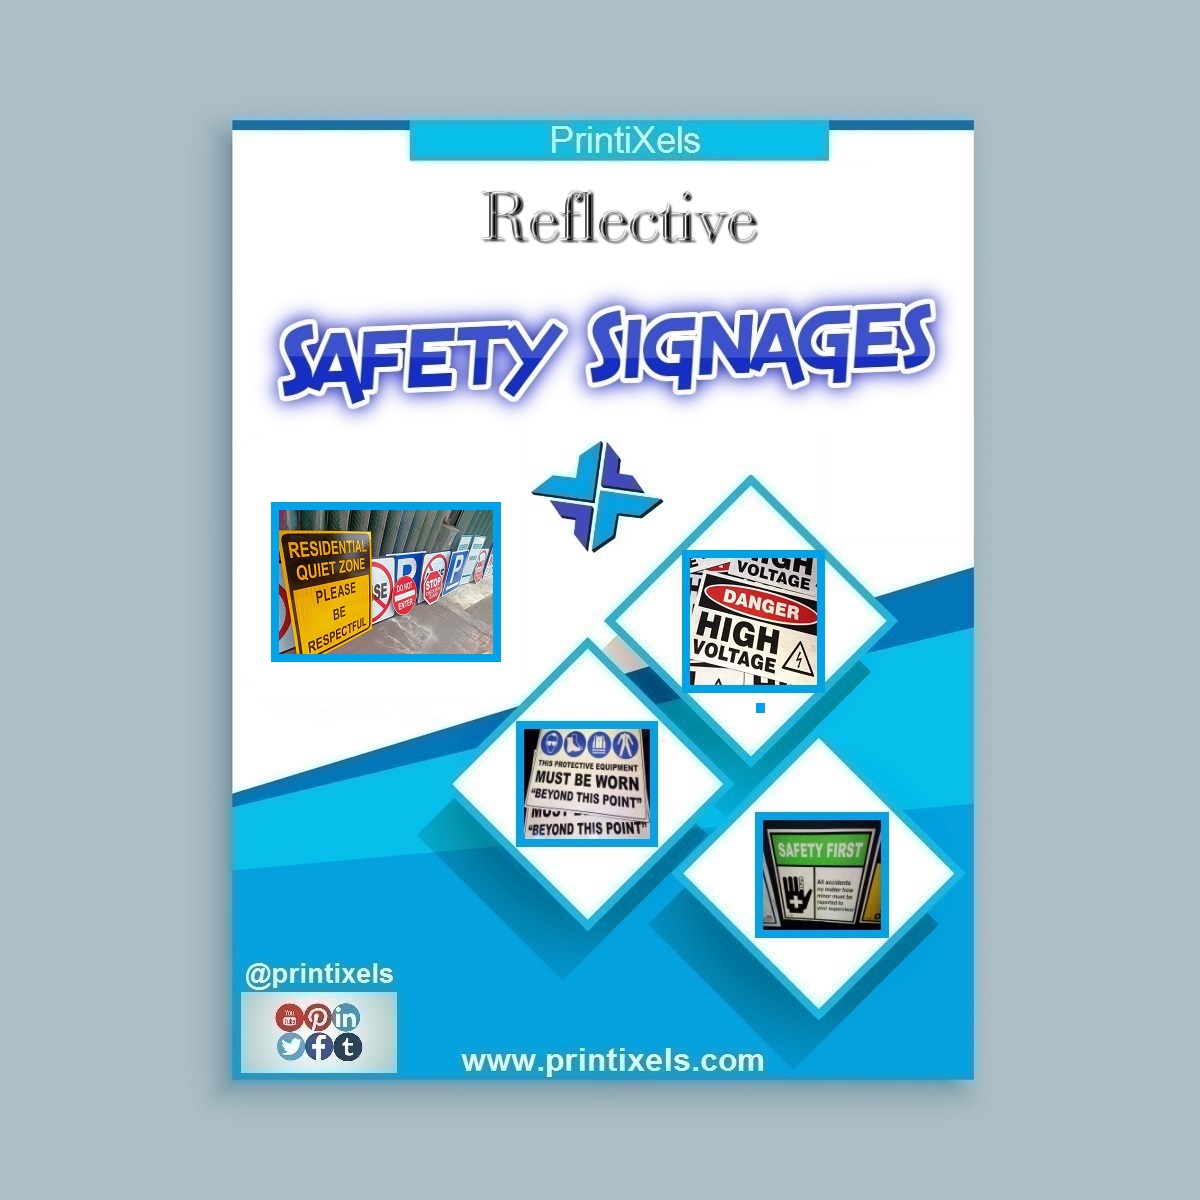 Reflective Safety Signages